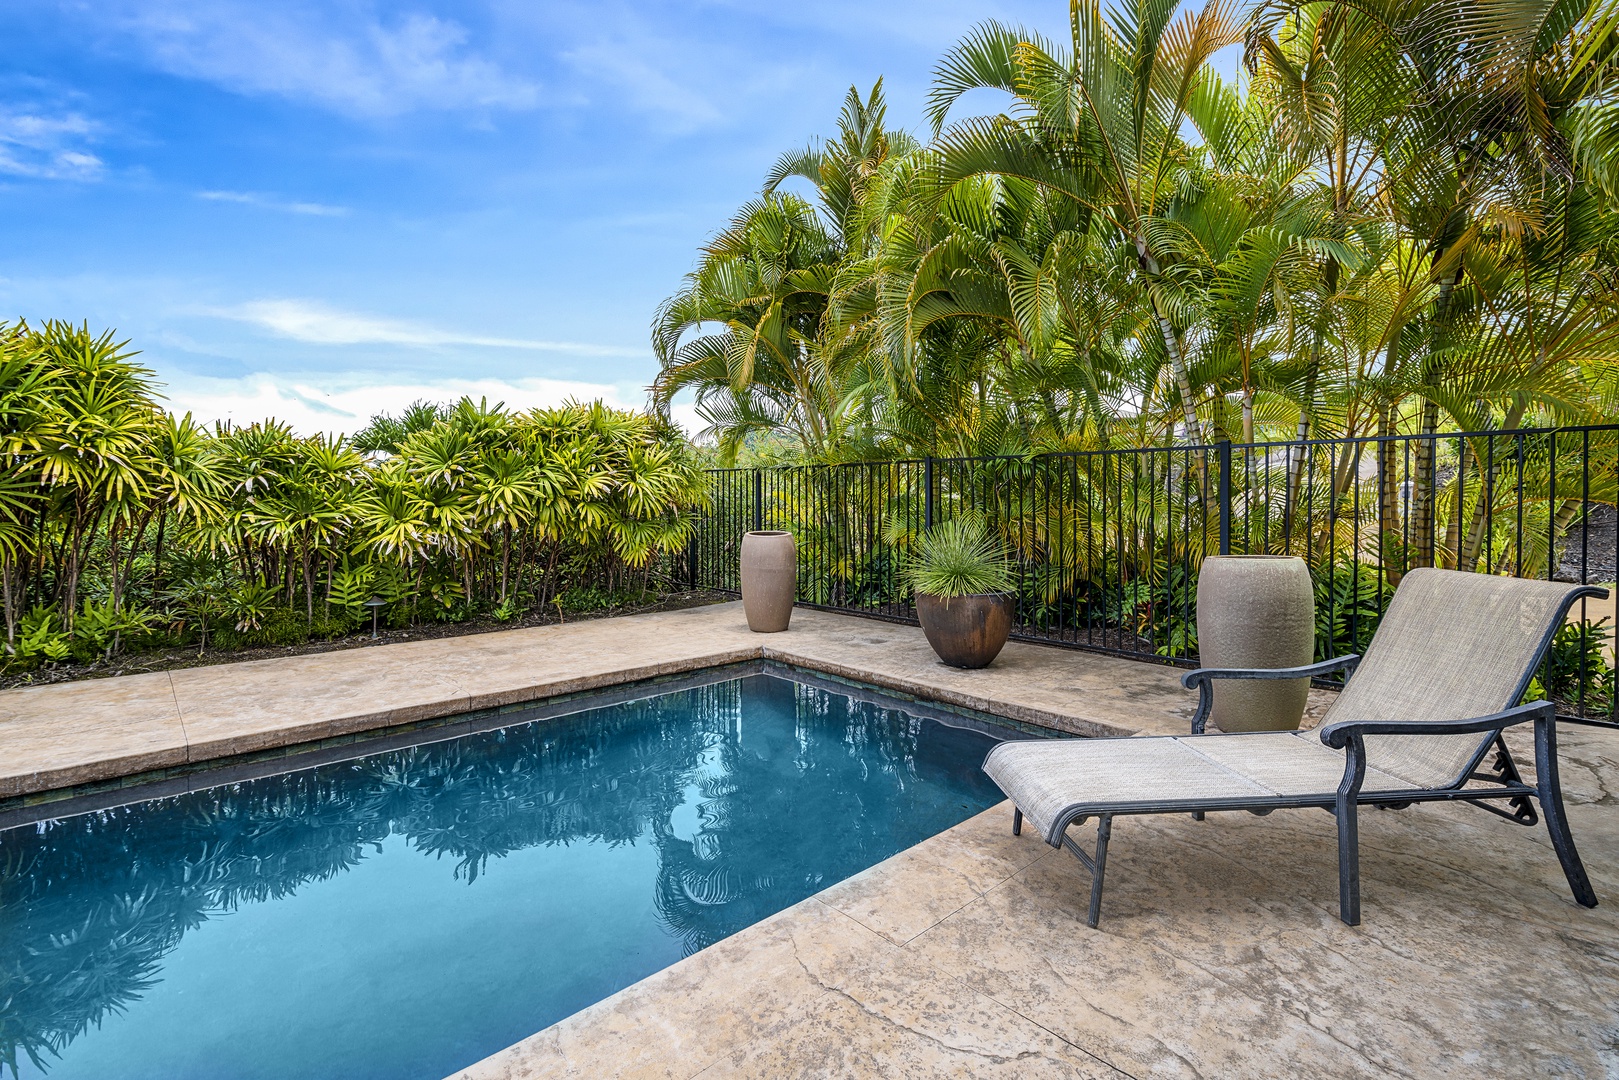 Kailua Kona Vacation Rentals, Sunset Hale - Beautiful pool